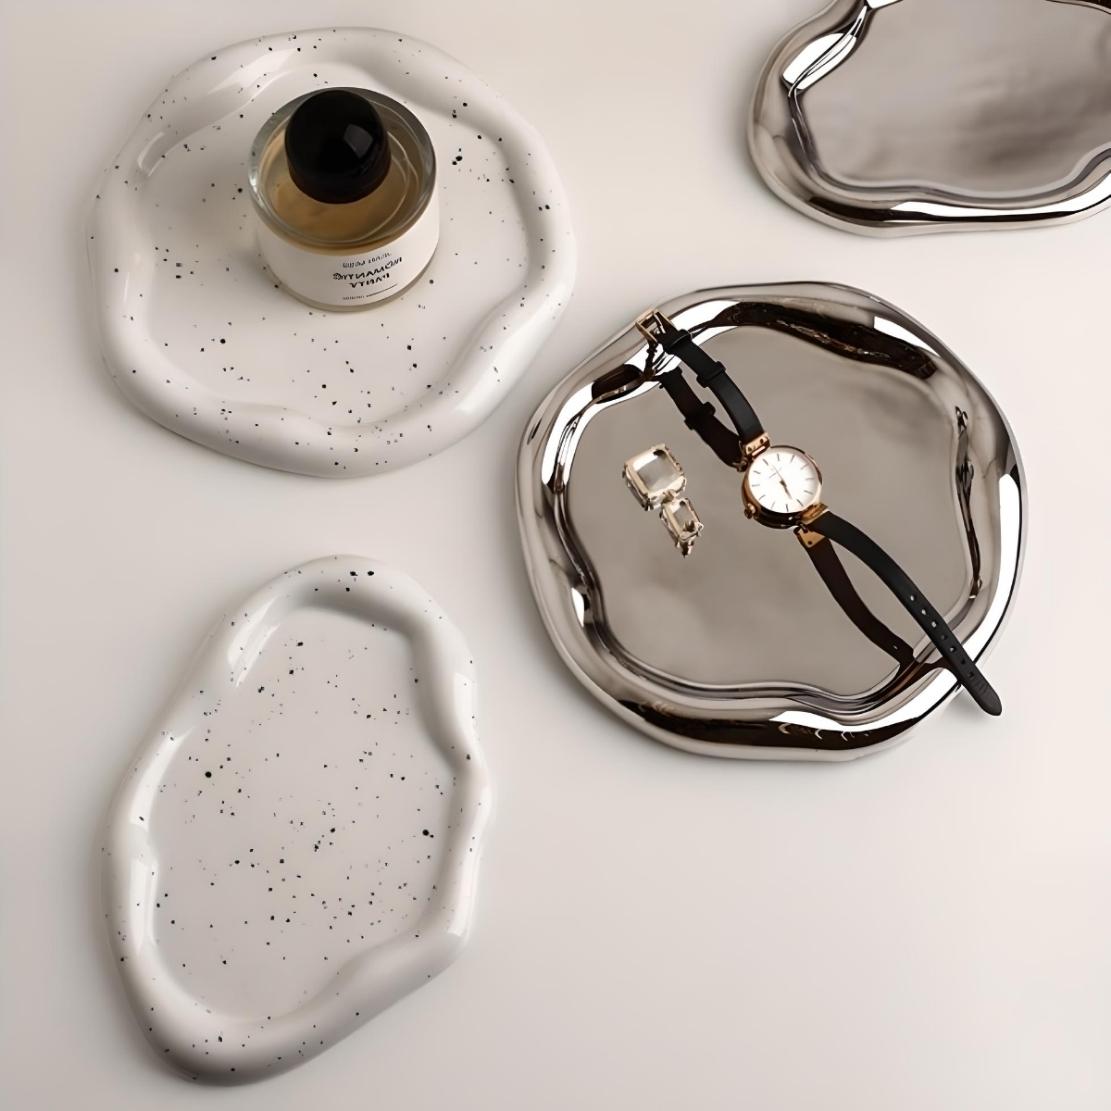 White & silver irregular ceramic trays